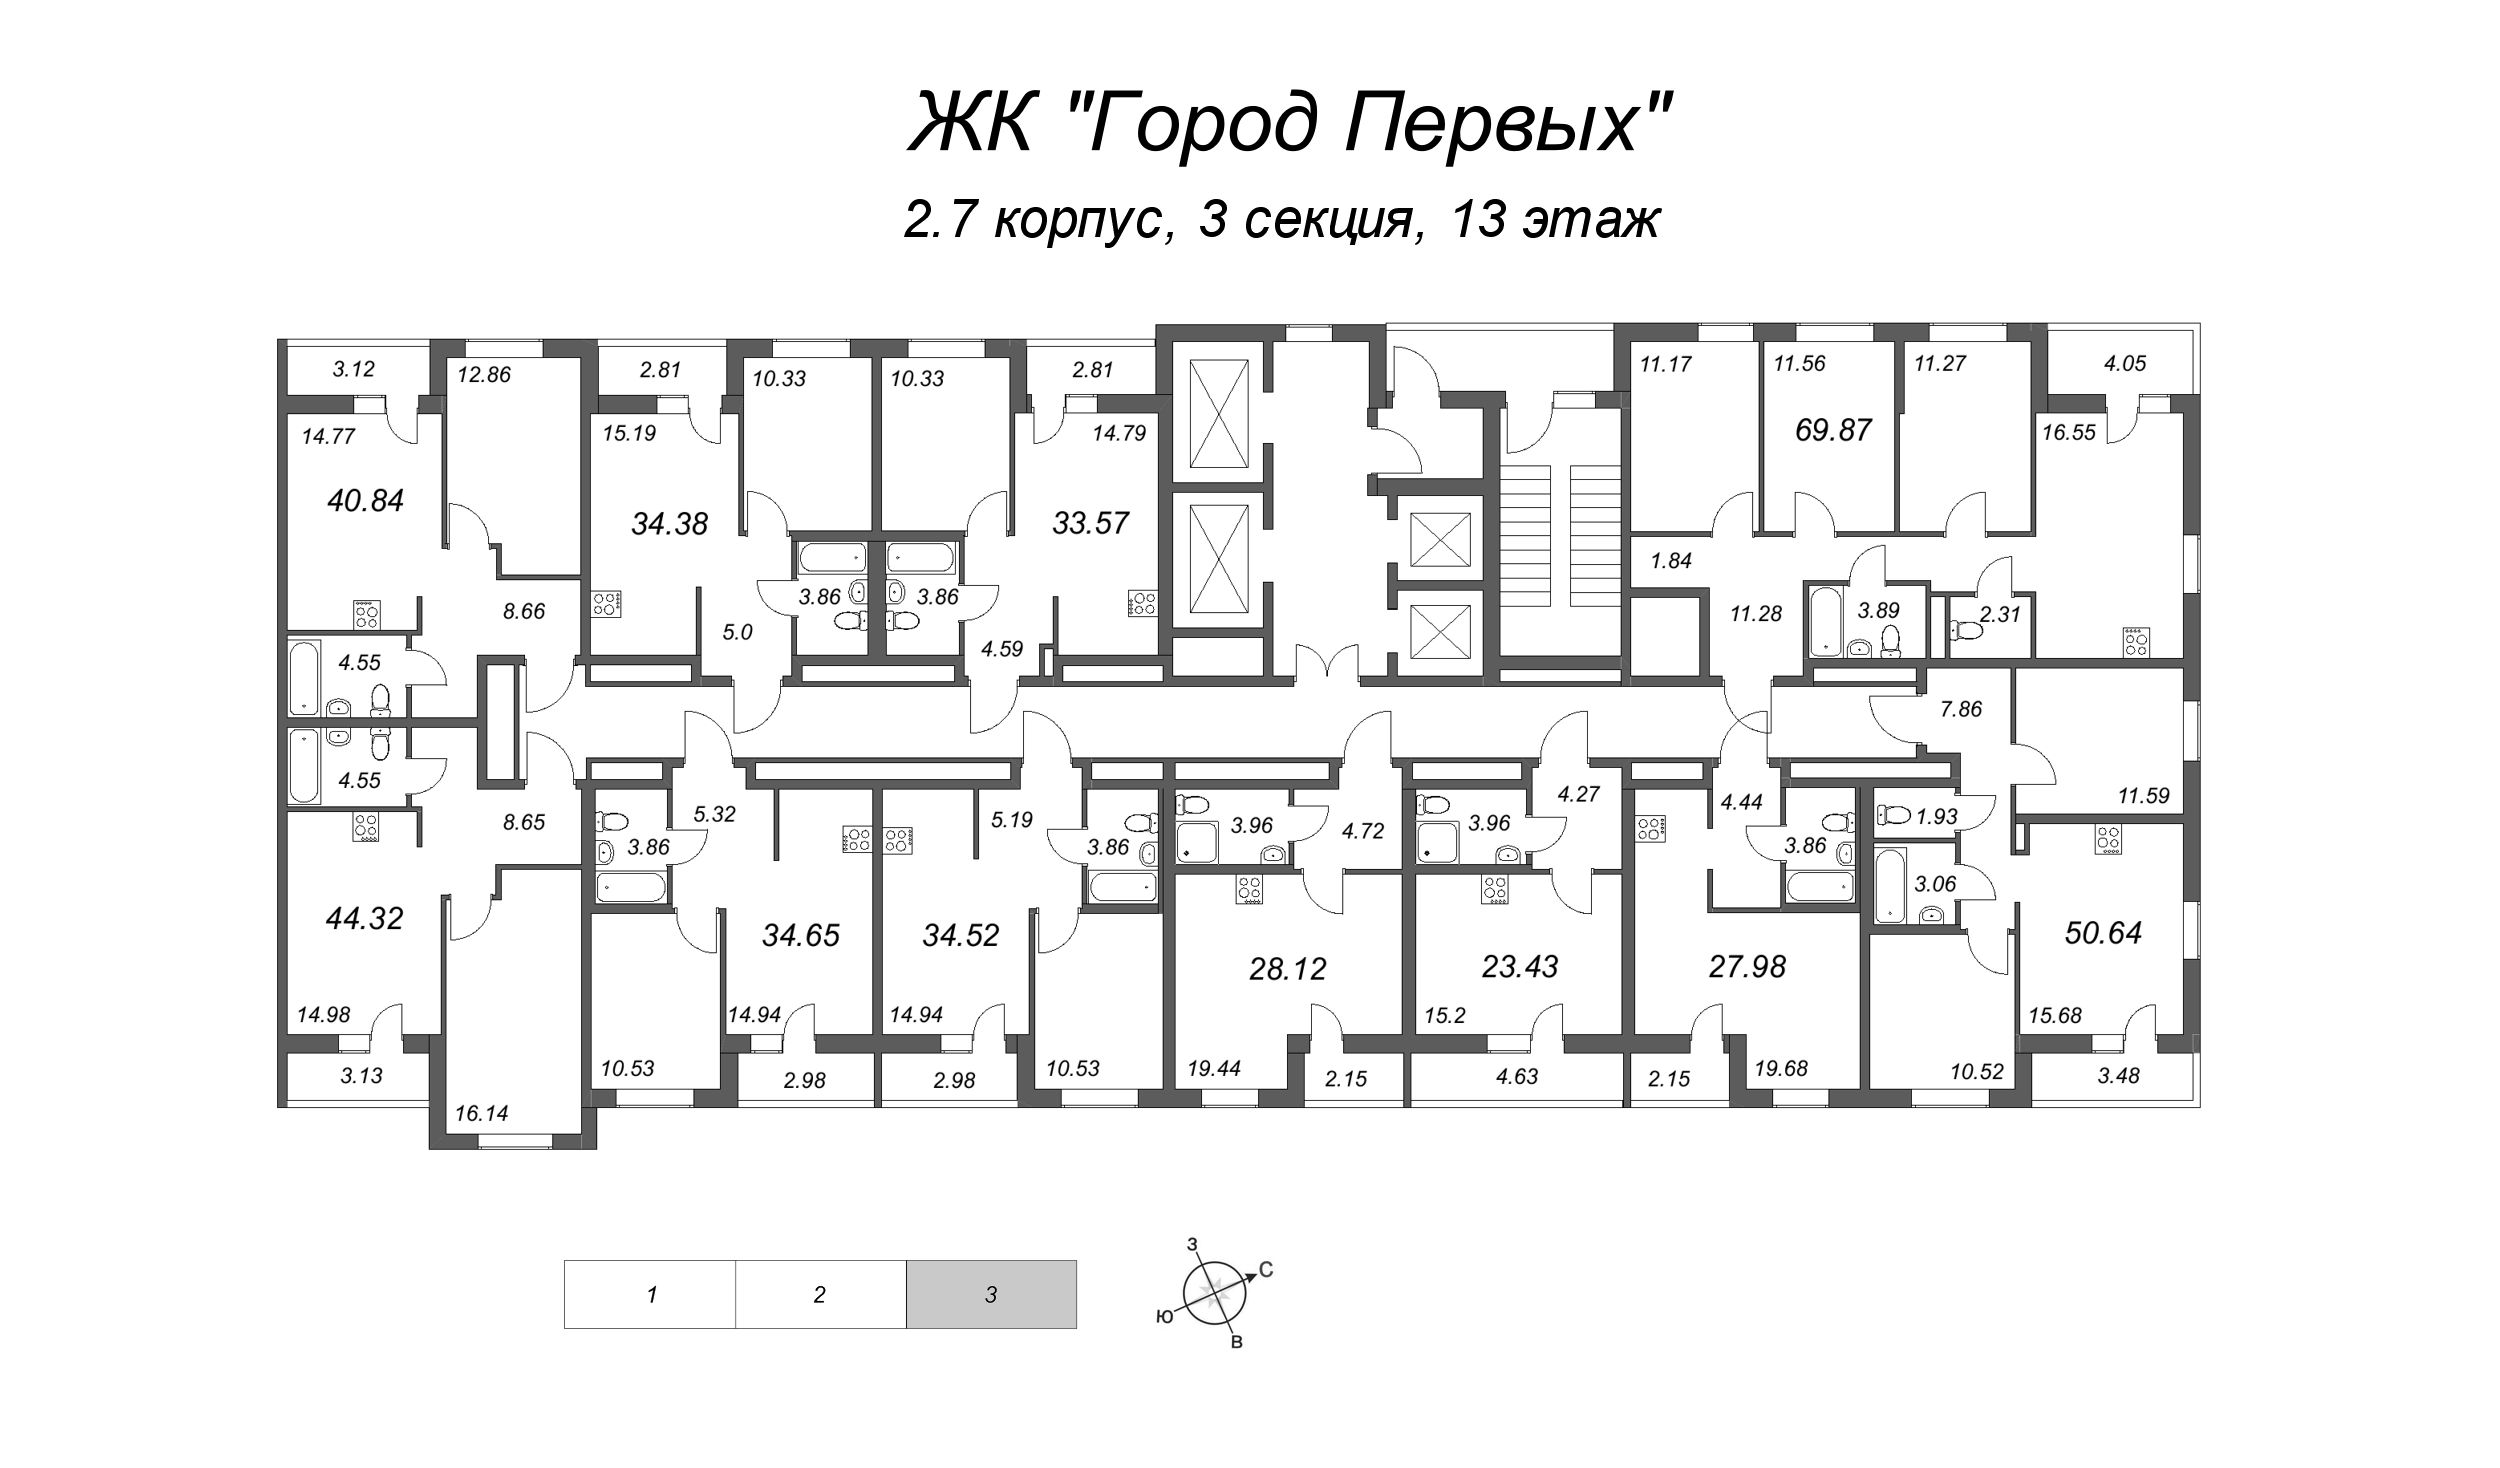 2-комнатная (Евро) квартира, 40.84 м² - планировка этажа